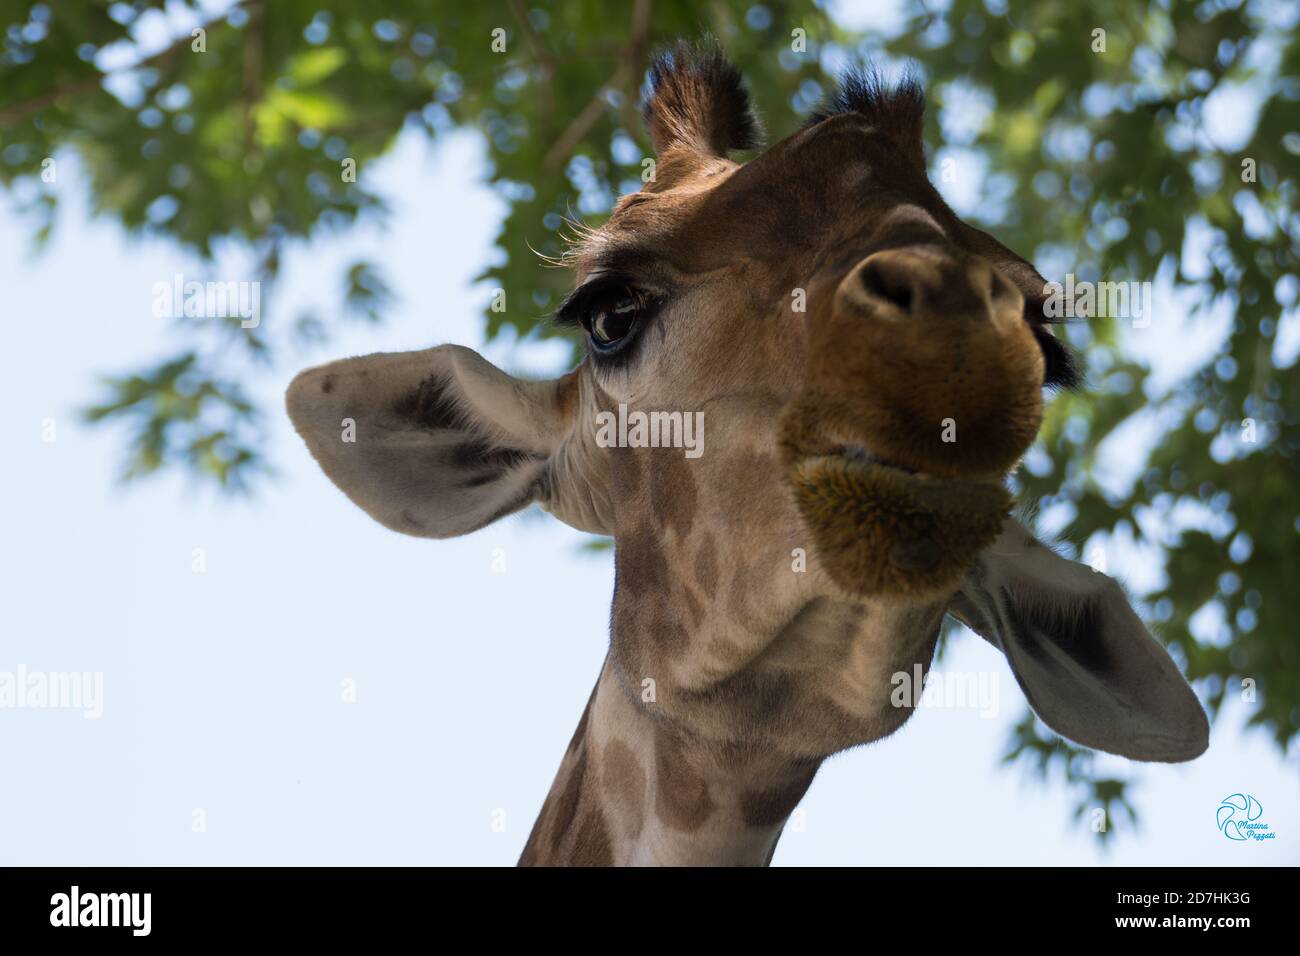 Giraffe smiling at me during photoshooting Stock Photo